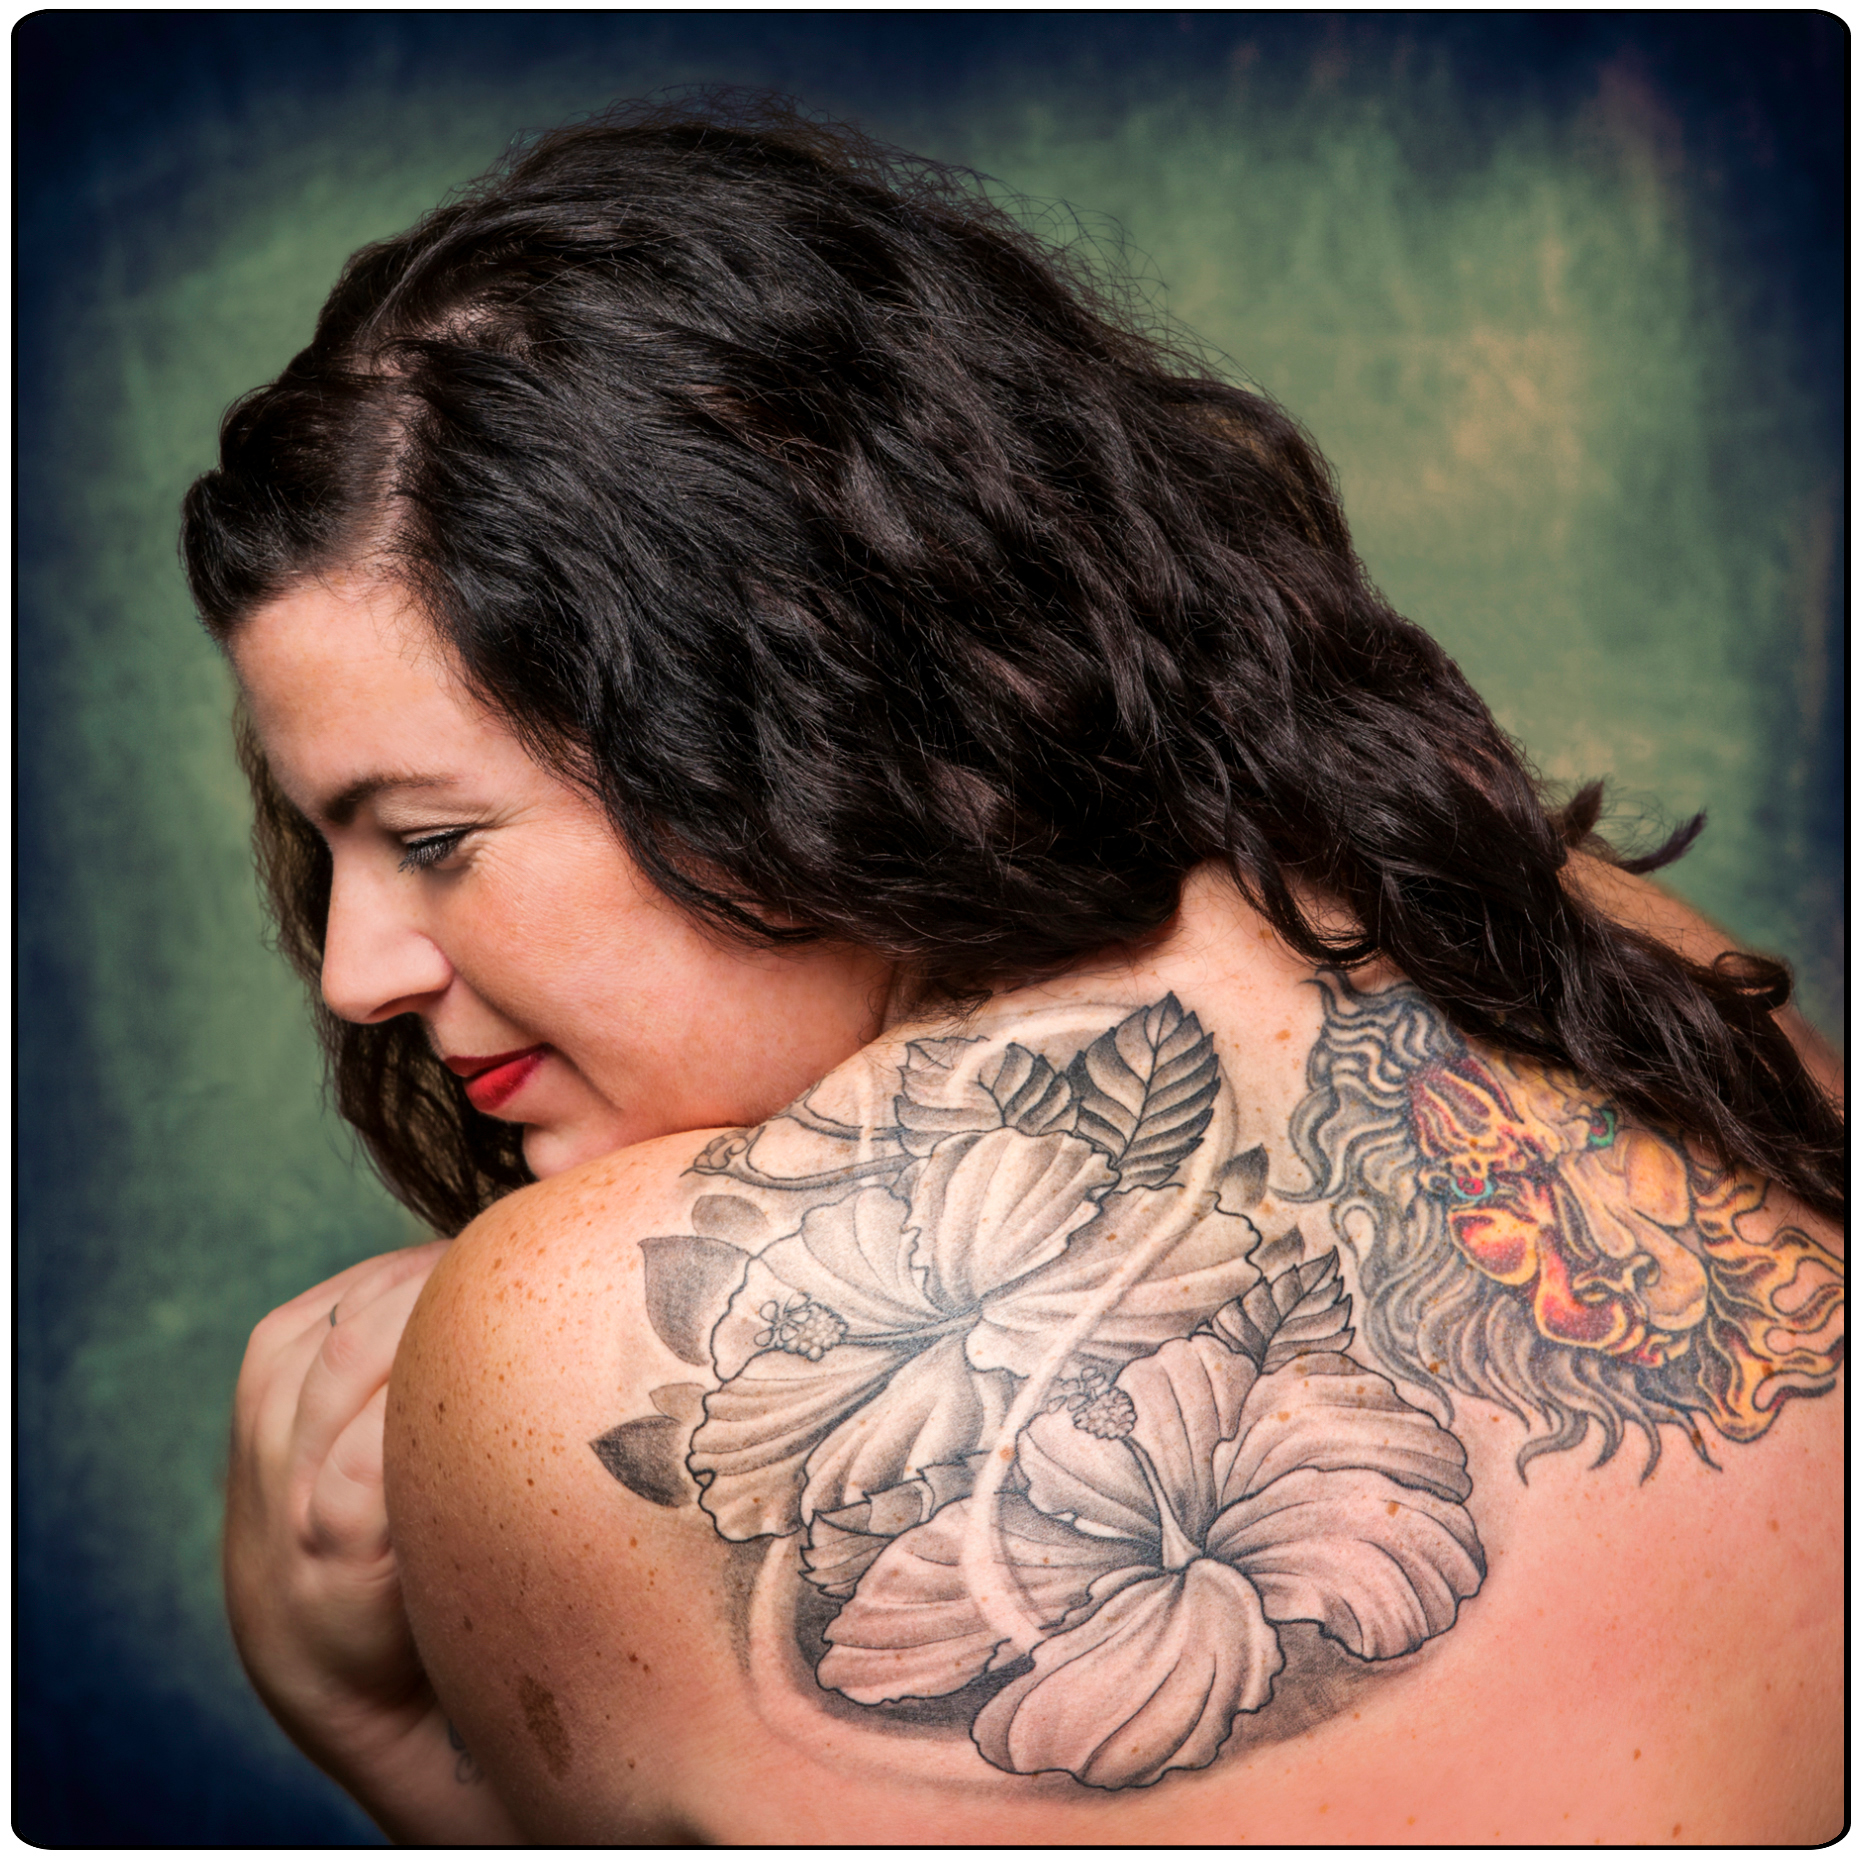 Studio portrait of tattoos on a nude woman